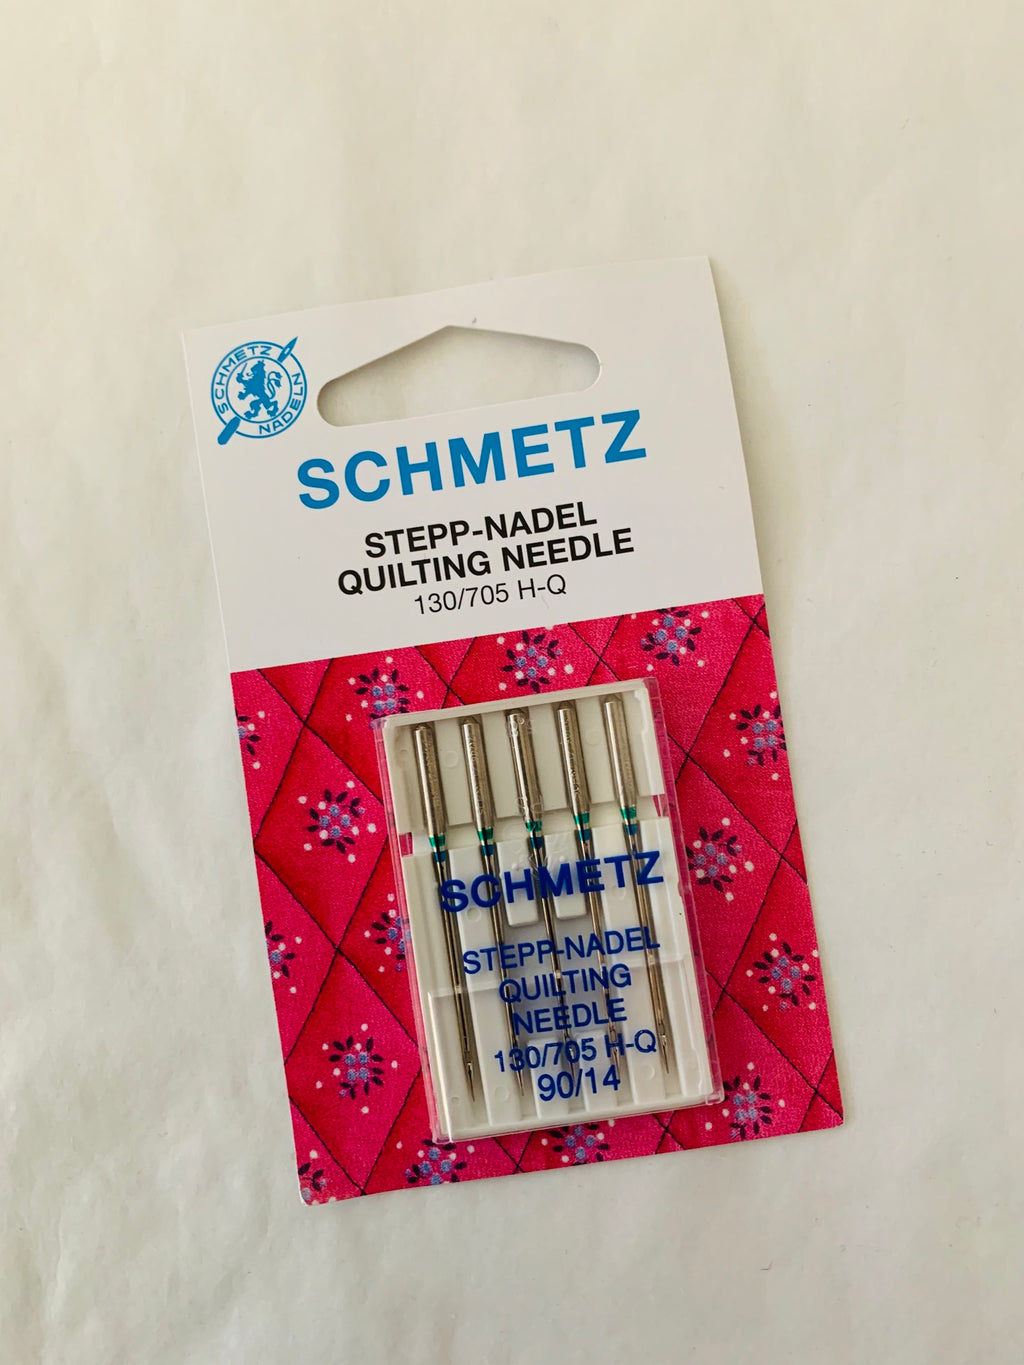 Schmetz quilting needle: 90/14